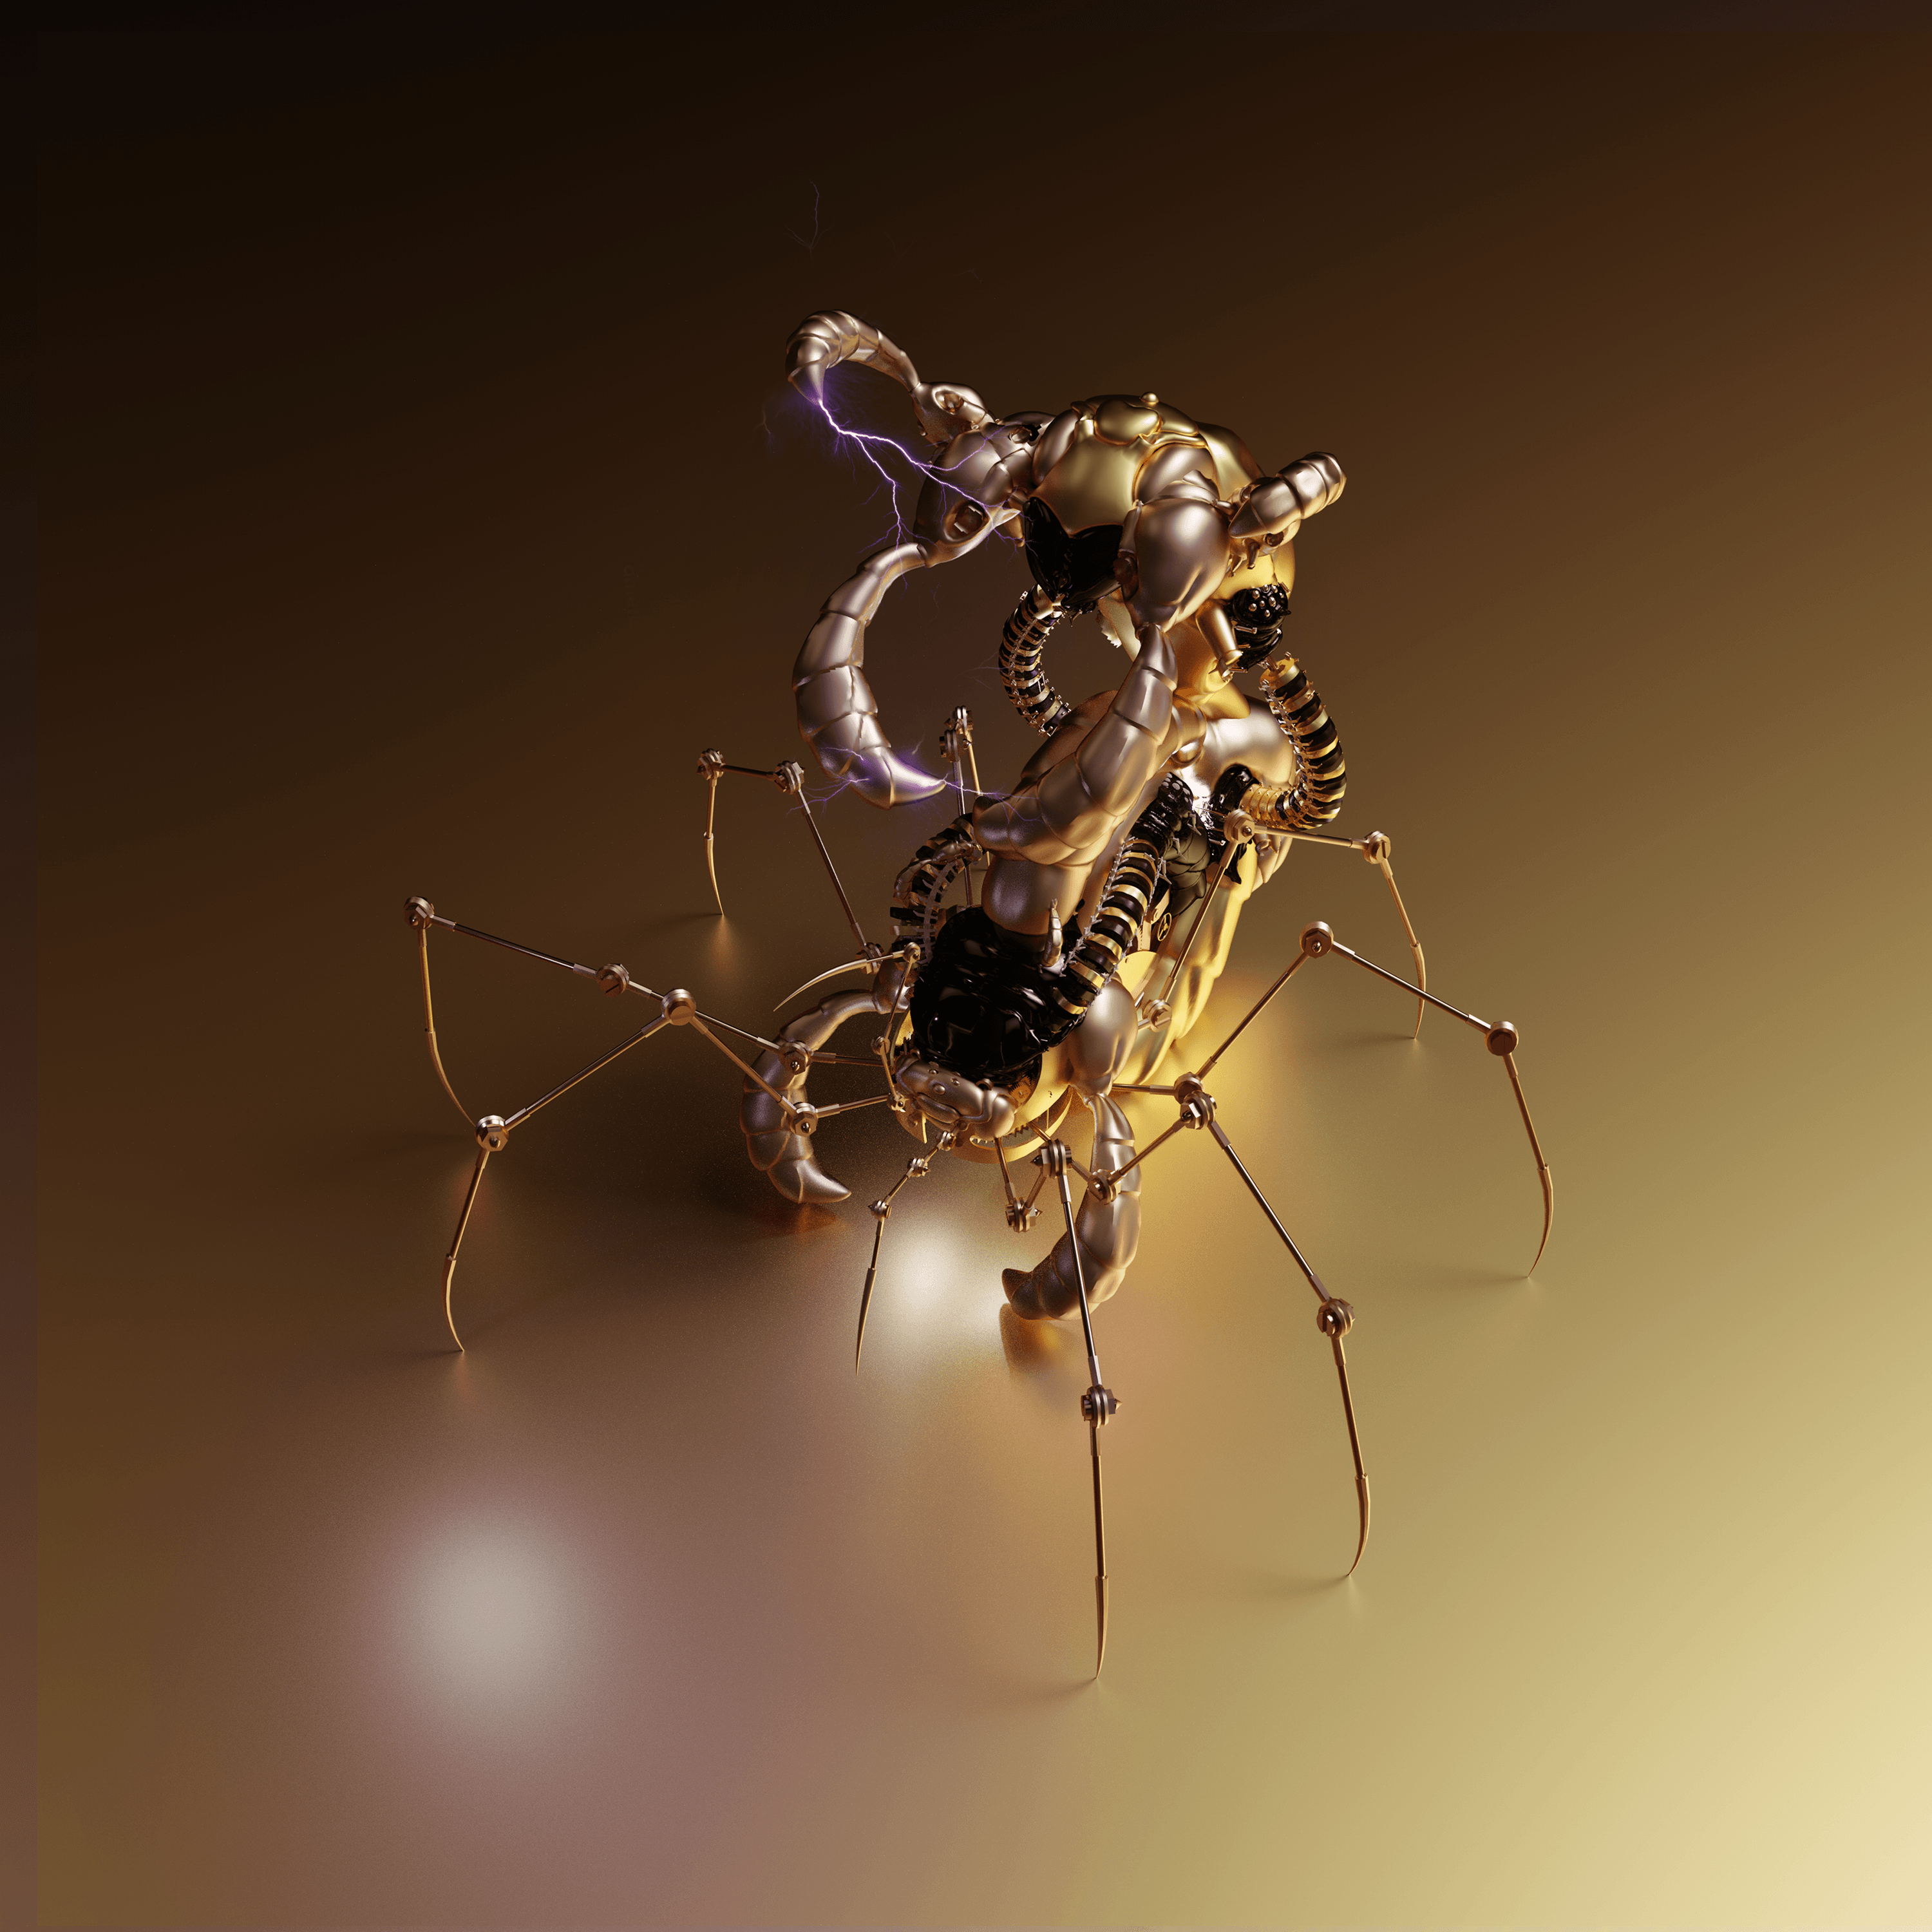 [081] Hexa-Pods - Arachnopod